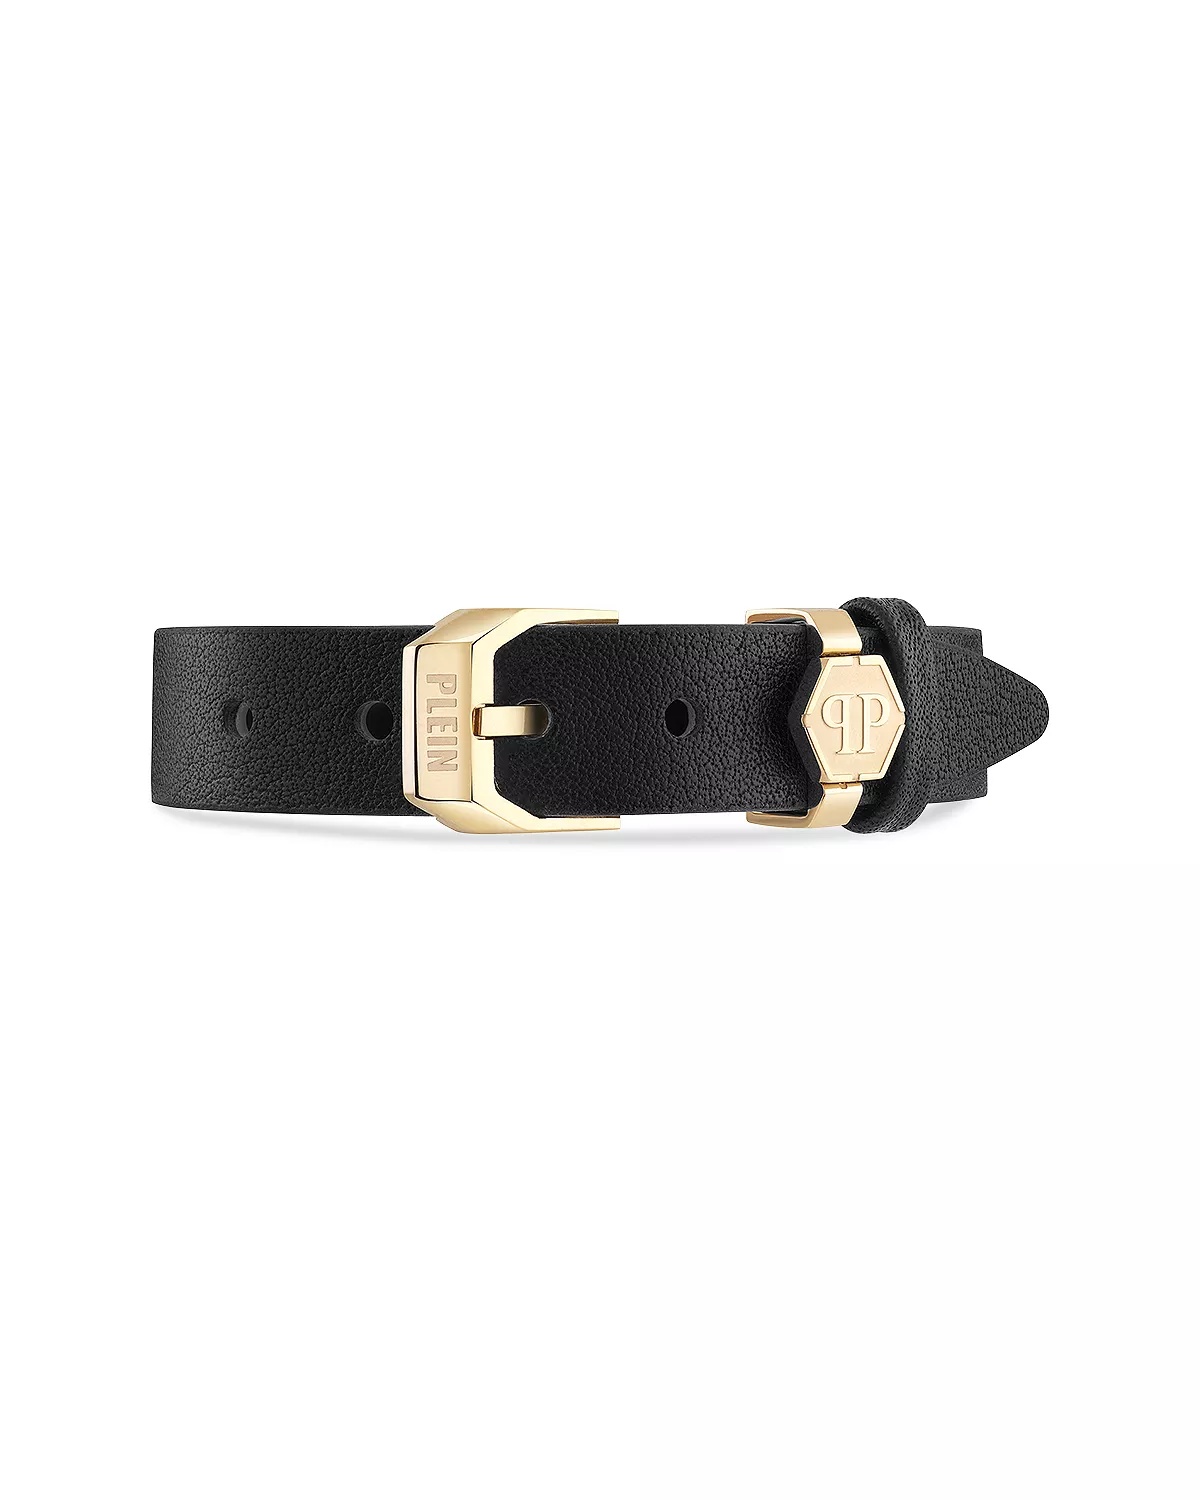 3D $kull Crystal Studded Leather Bracelet - 3